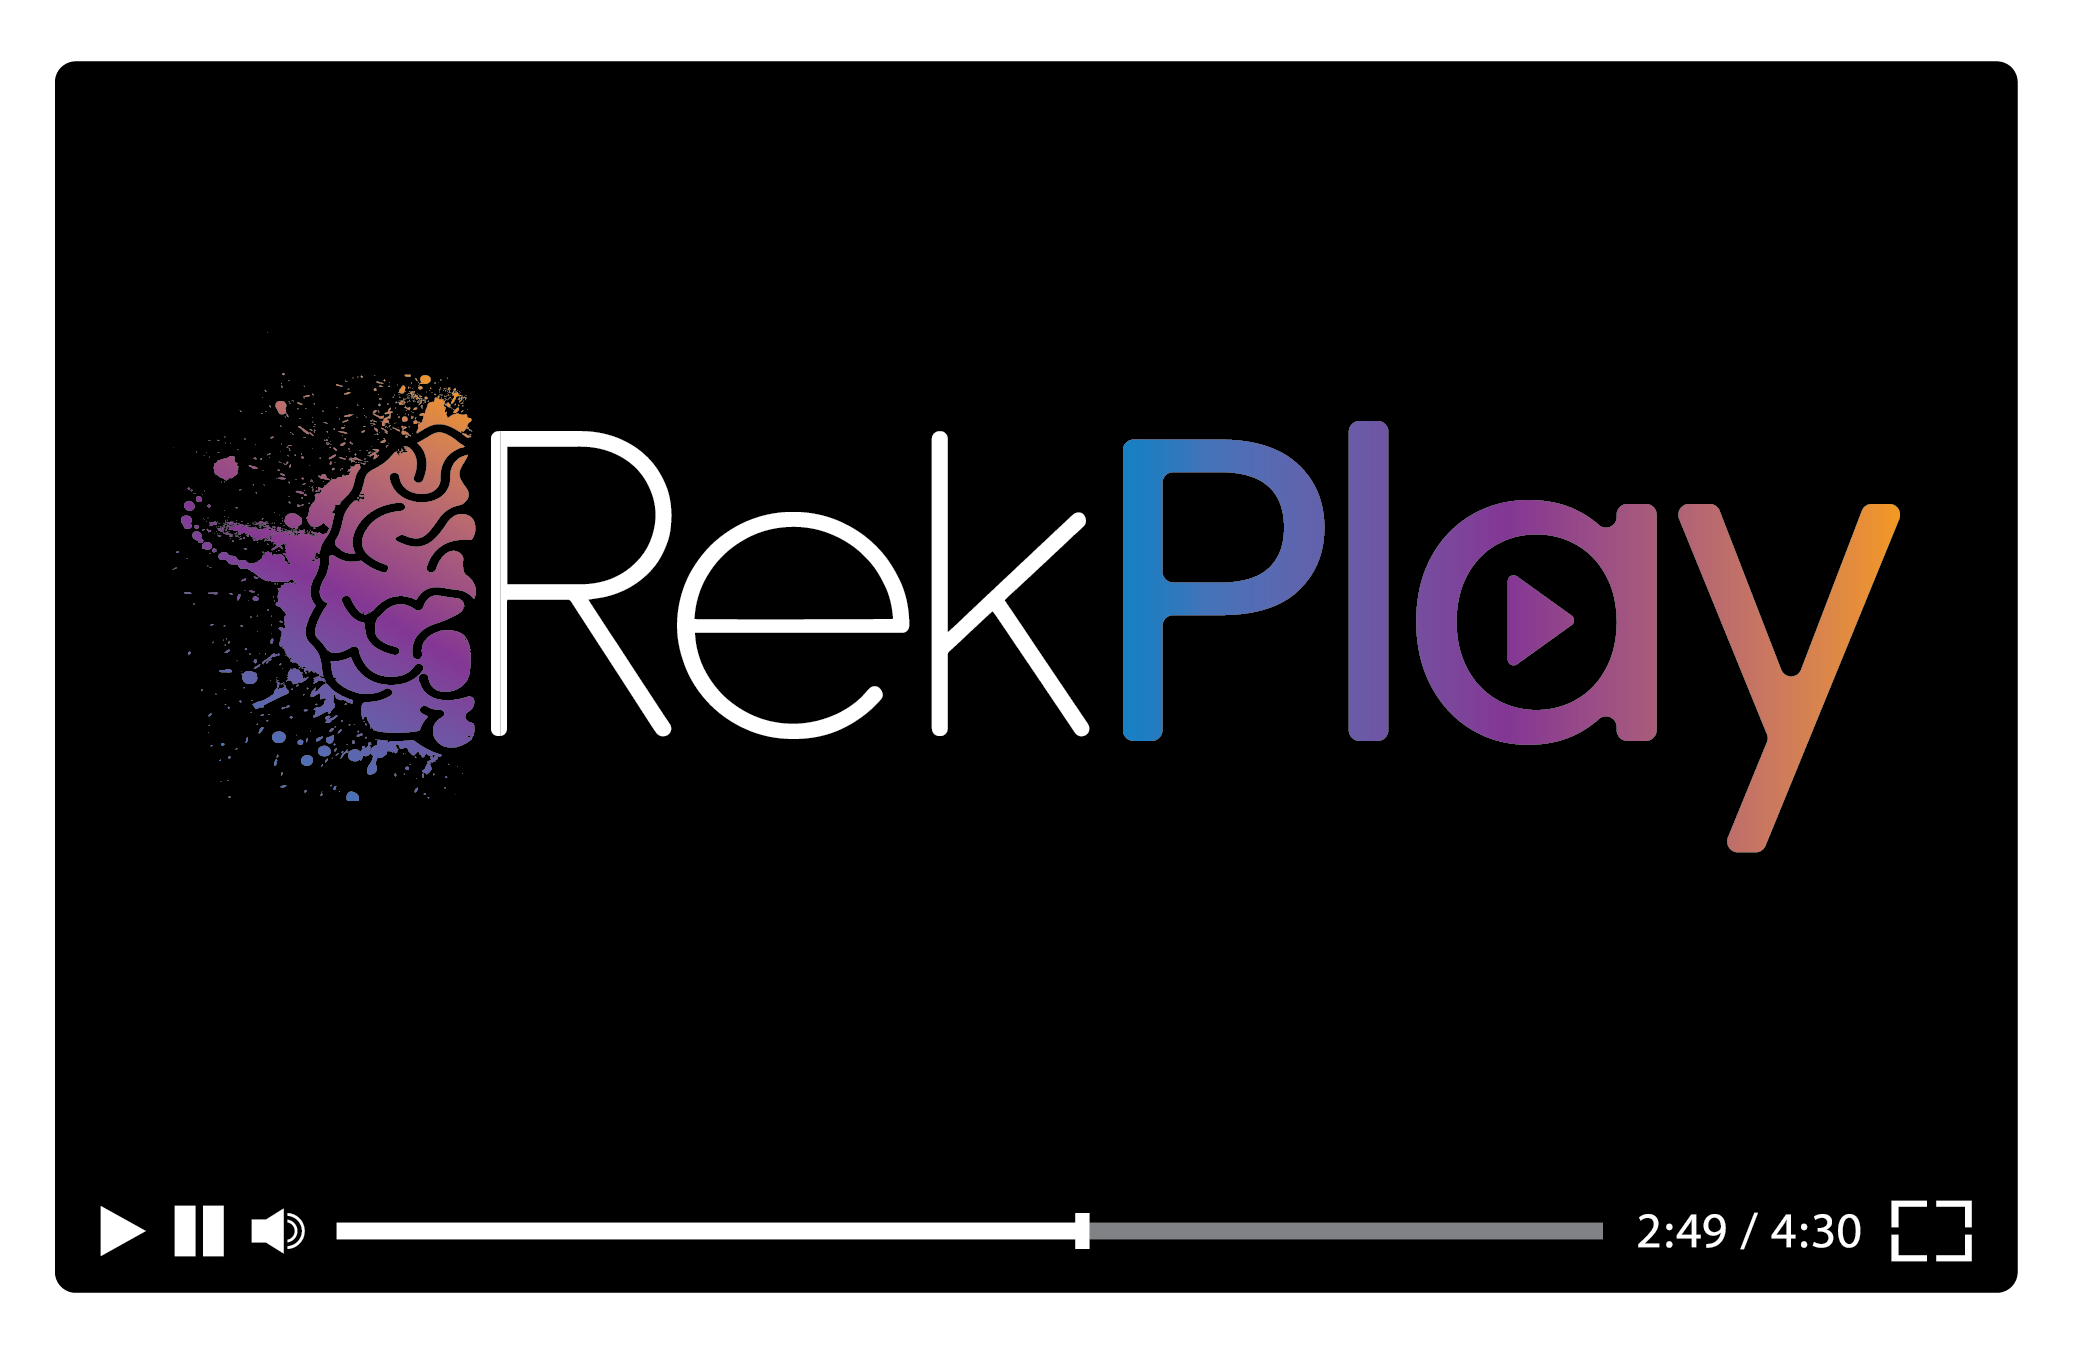 How to get RekPlay?